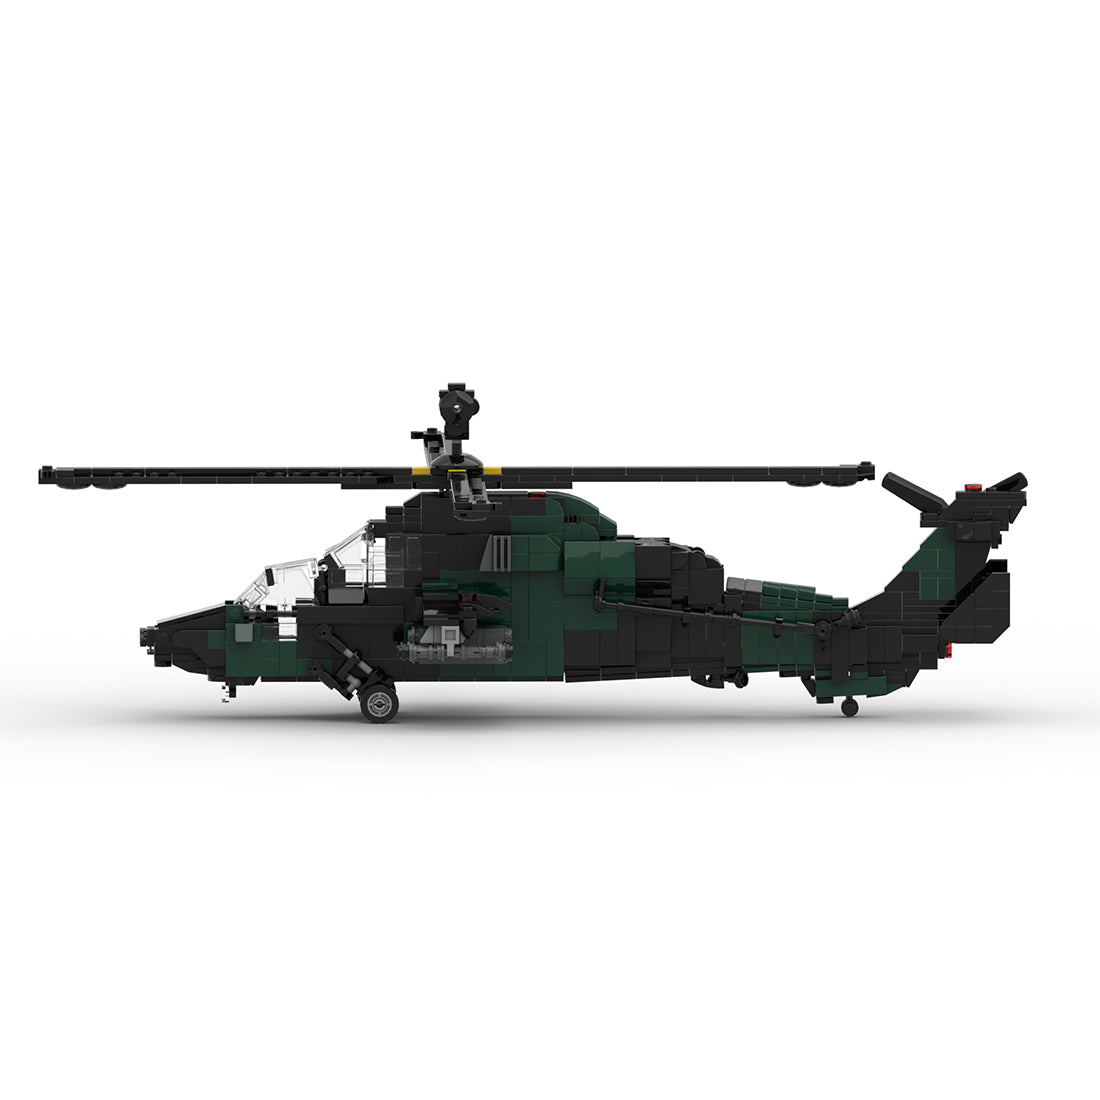 MOC-177490 EC 665 Armed European Helicopter Military | LesDiy.com